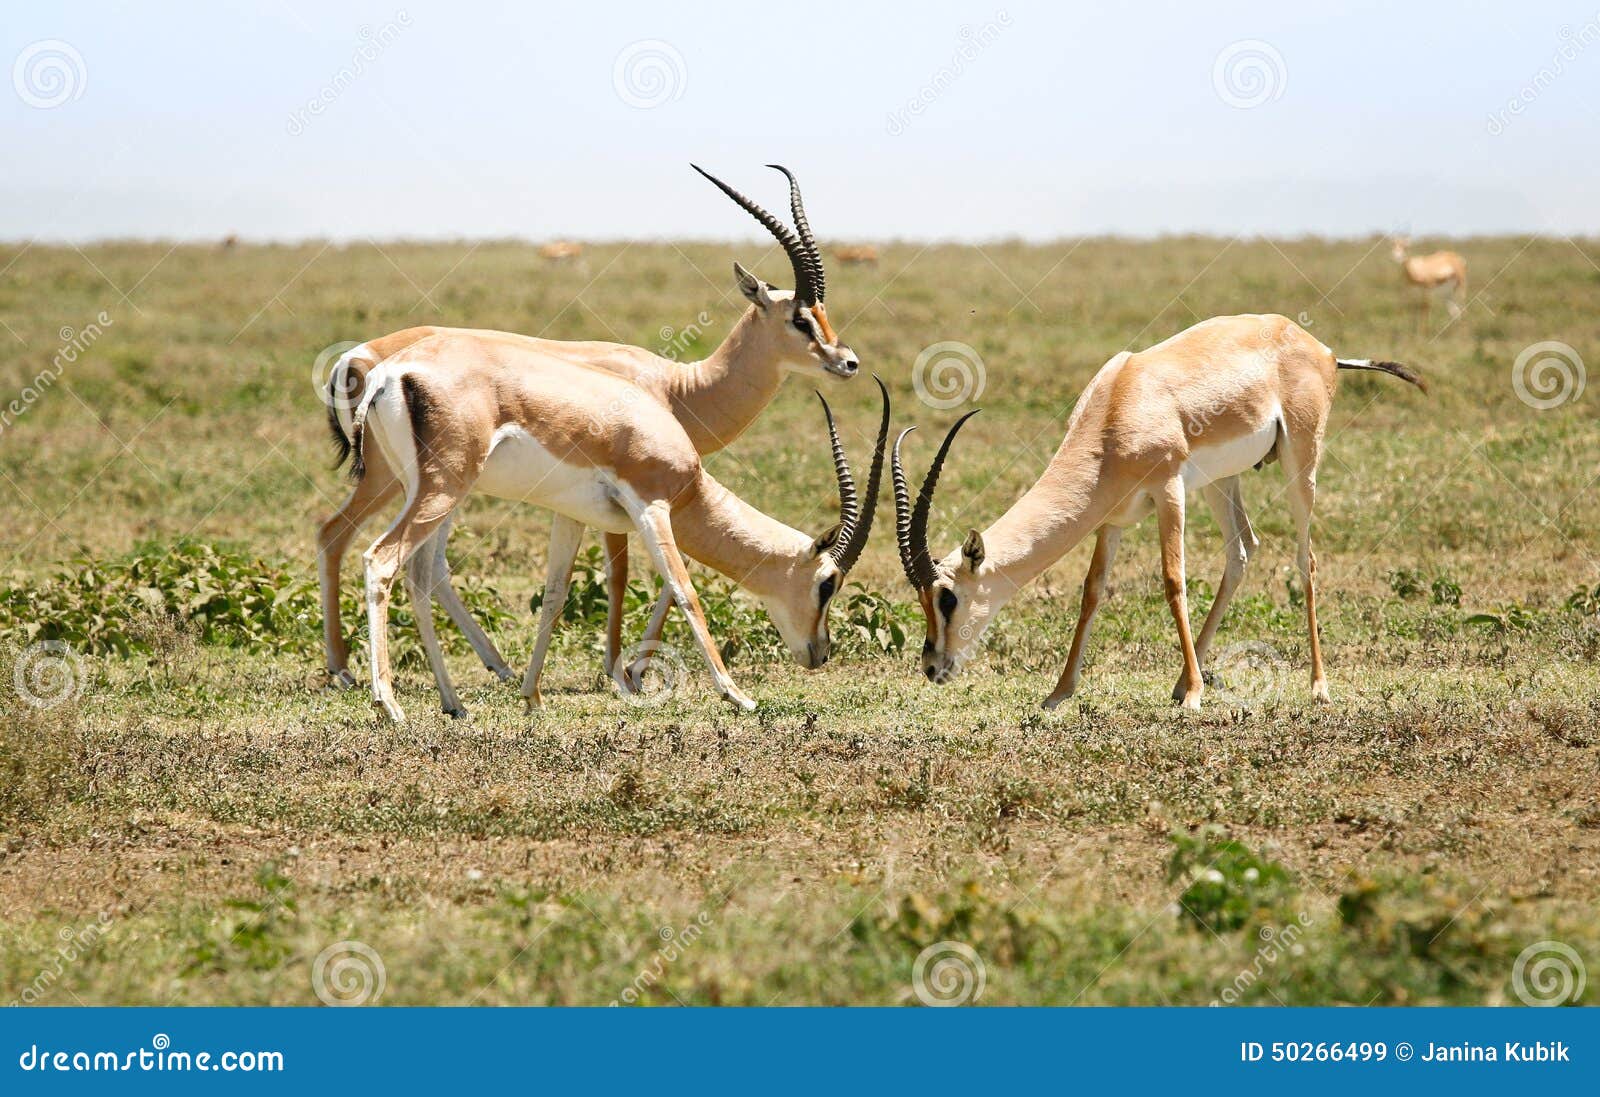 hunting gazelles